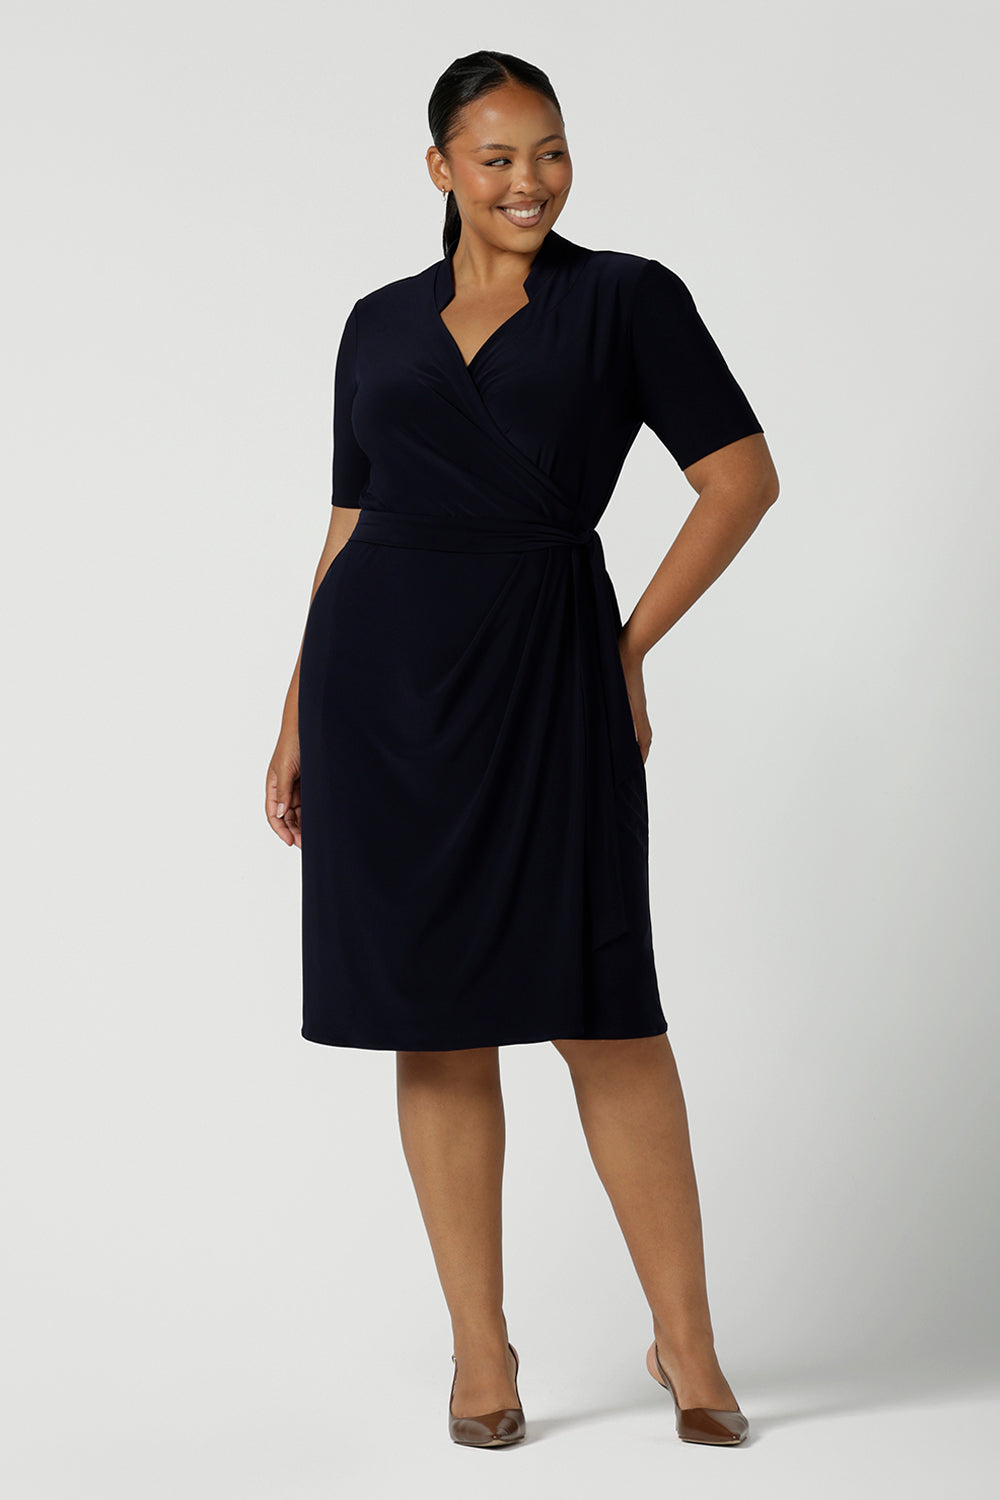 Kris Dress in Navy | Leina & Fleur | Corporate Dresses for Women